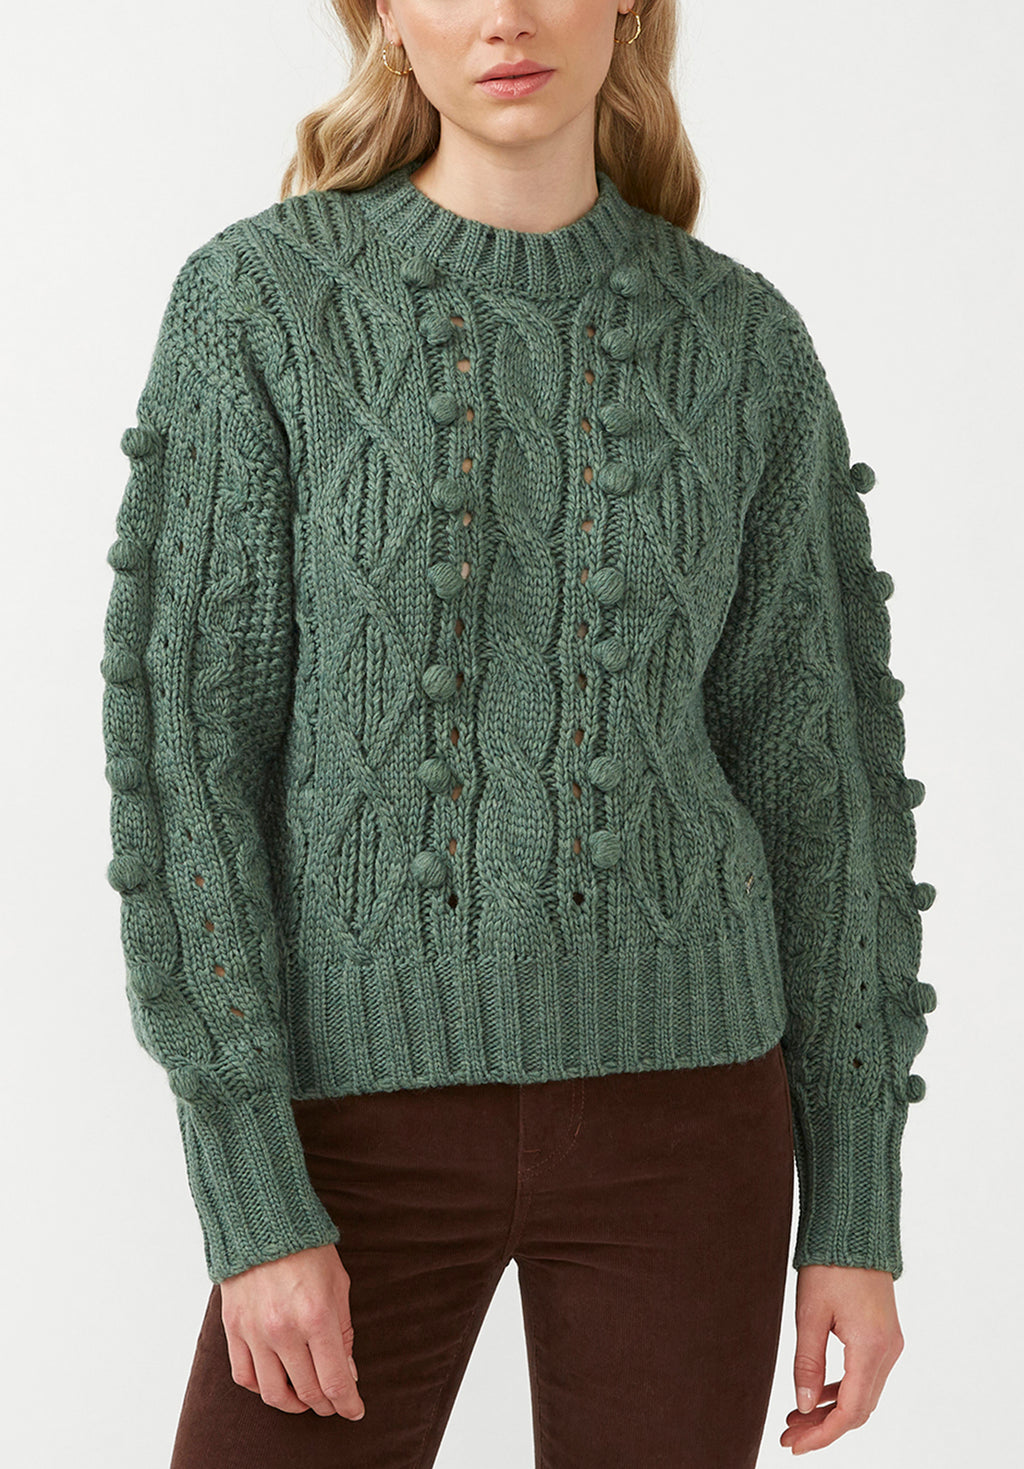 Larsa Women's Crew Neck Sweater in Dark Green - SW0021F